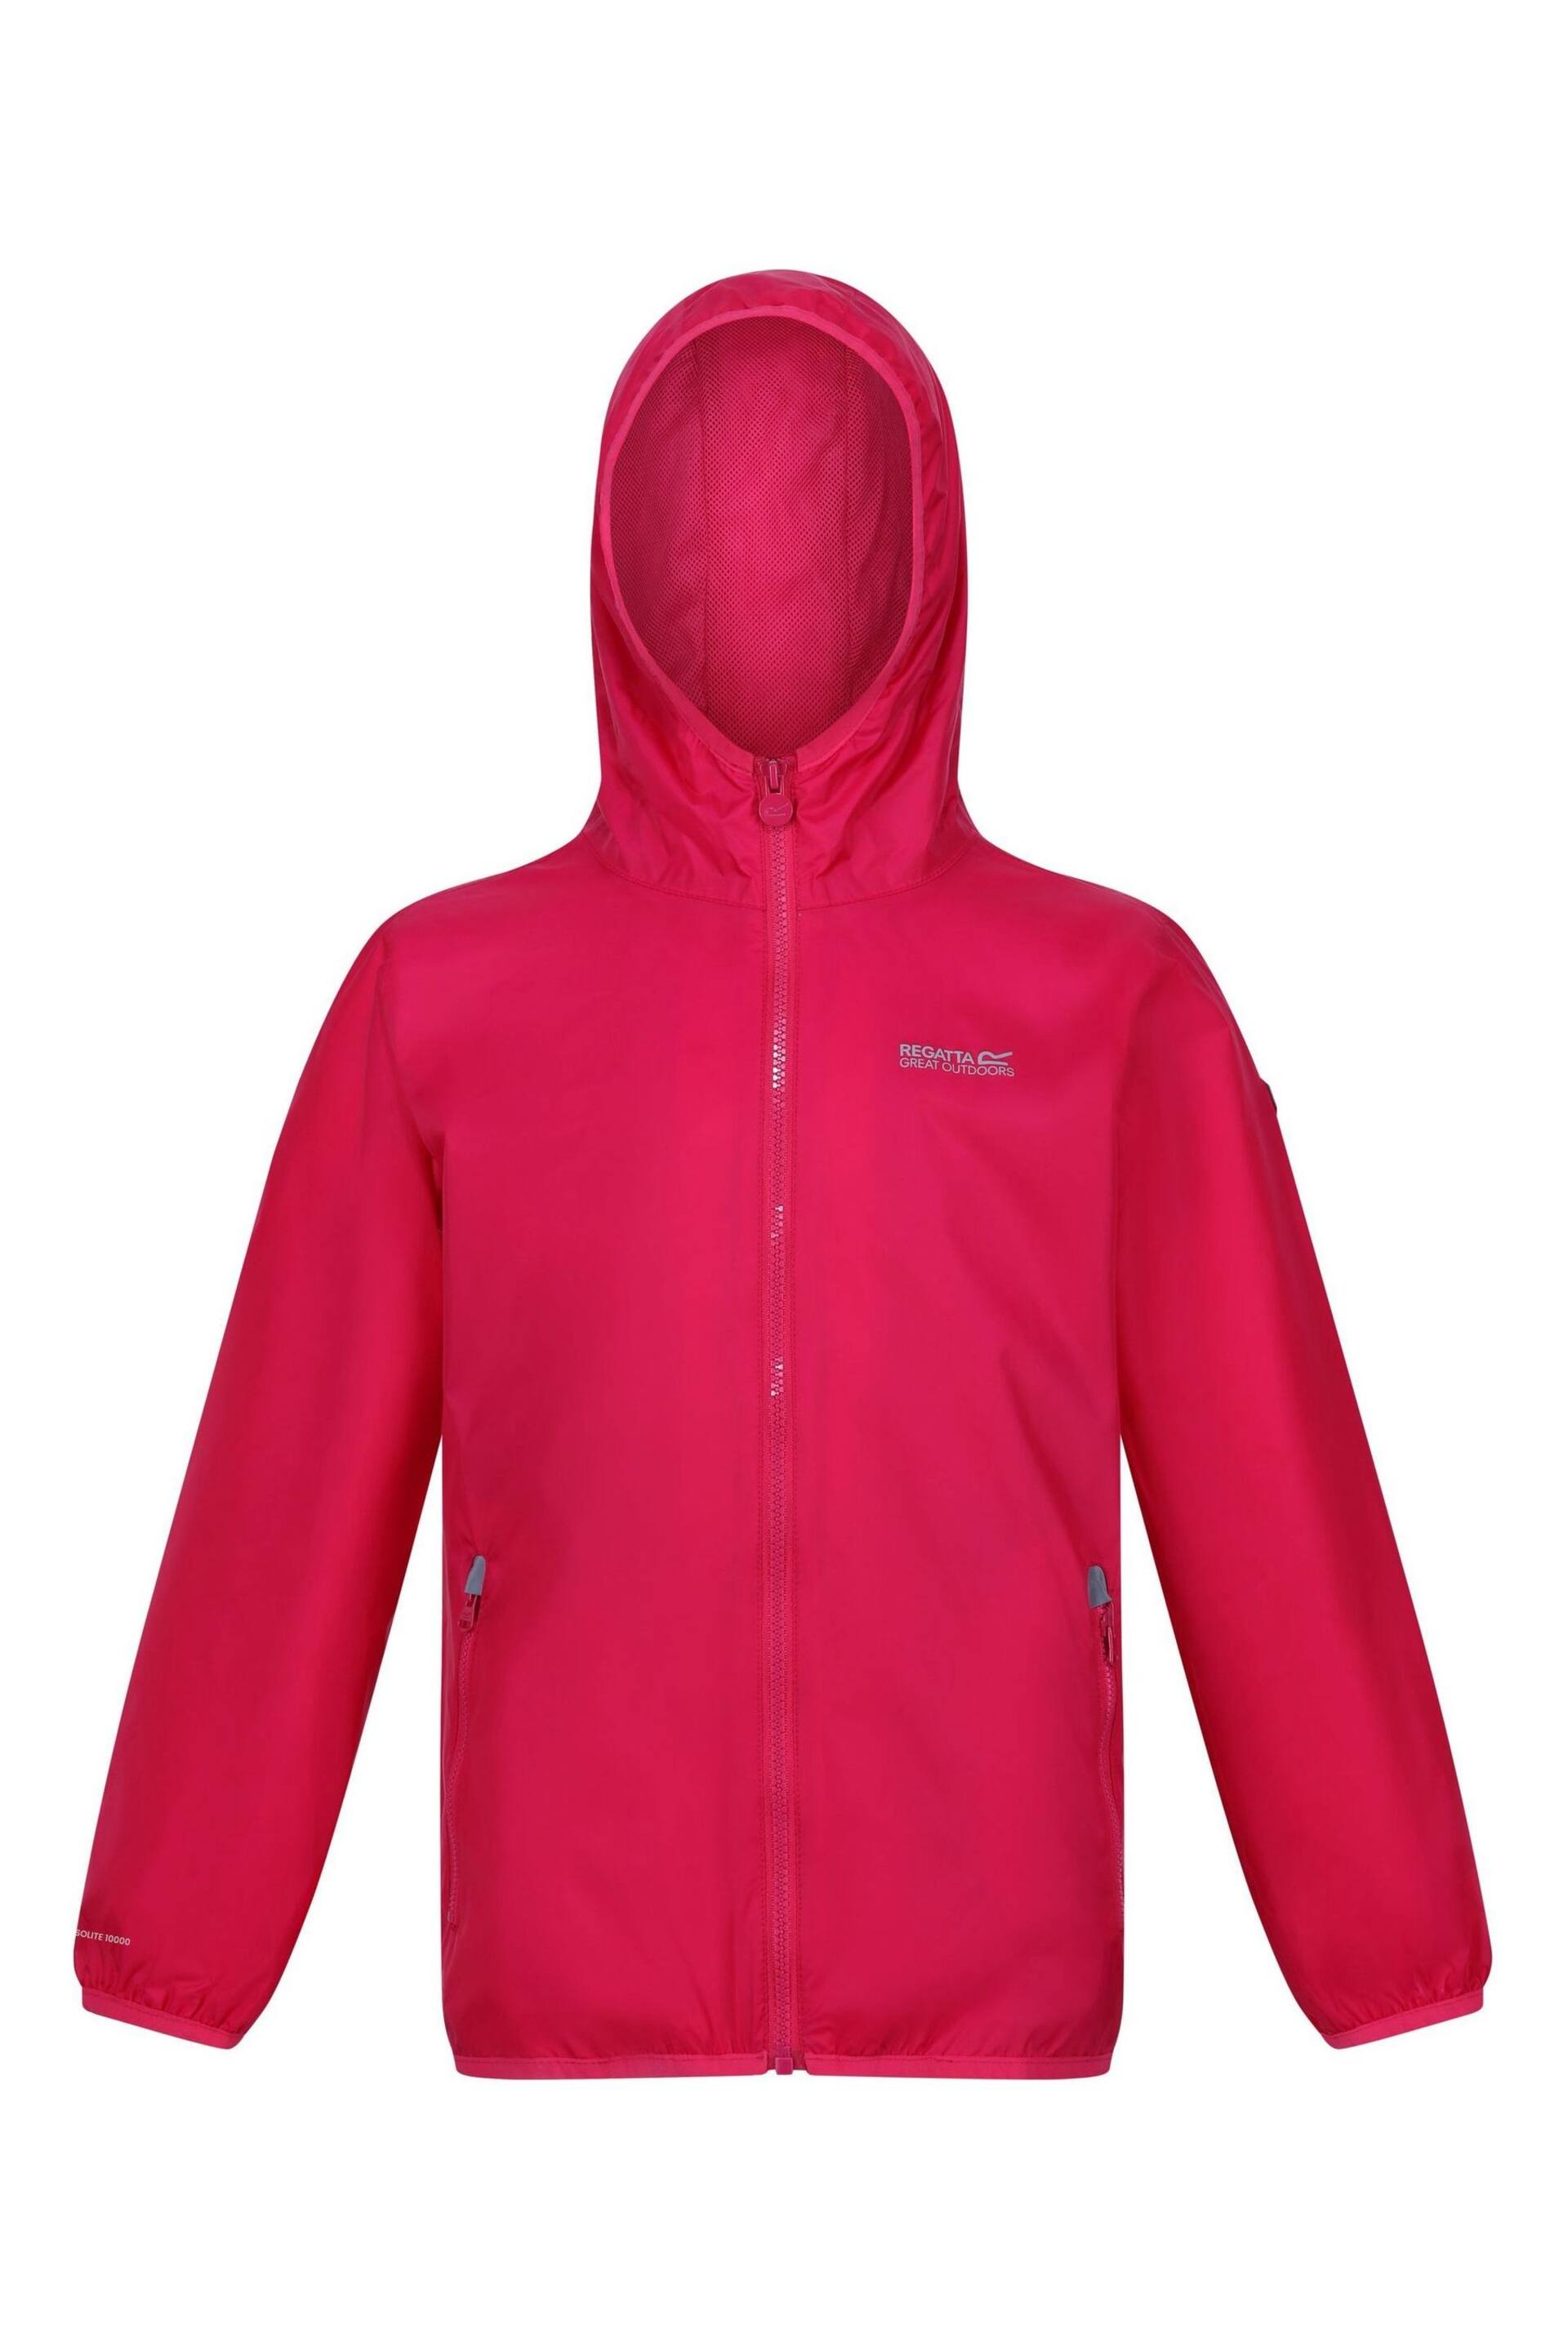 Regatta Pink Lever II Waterproof Jacket - Image 6 of 8